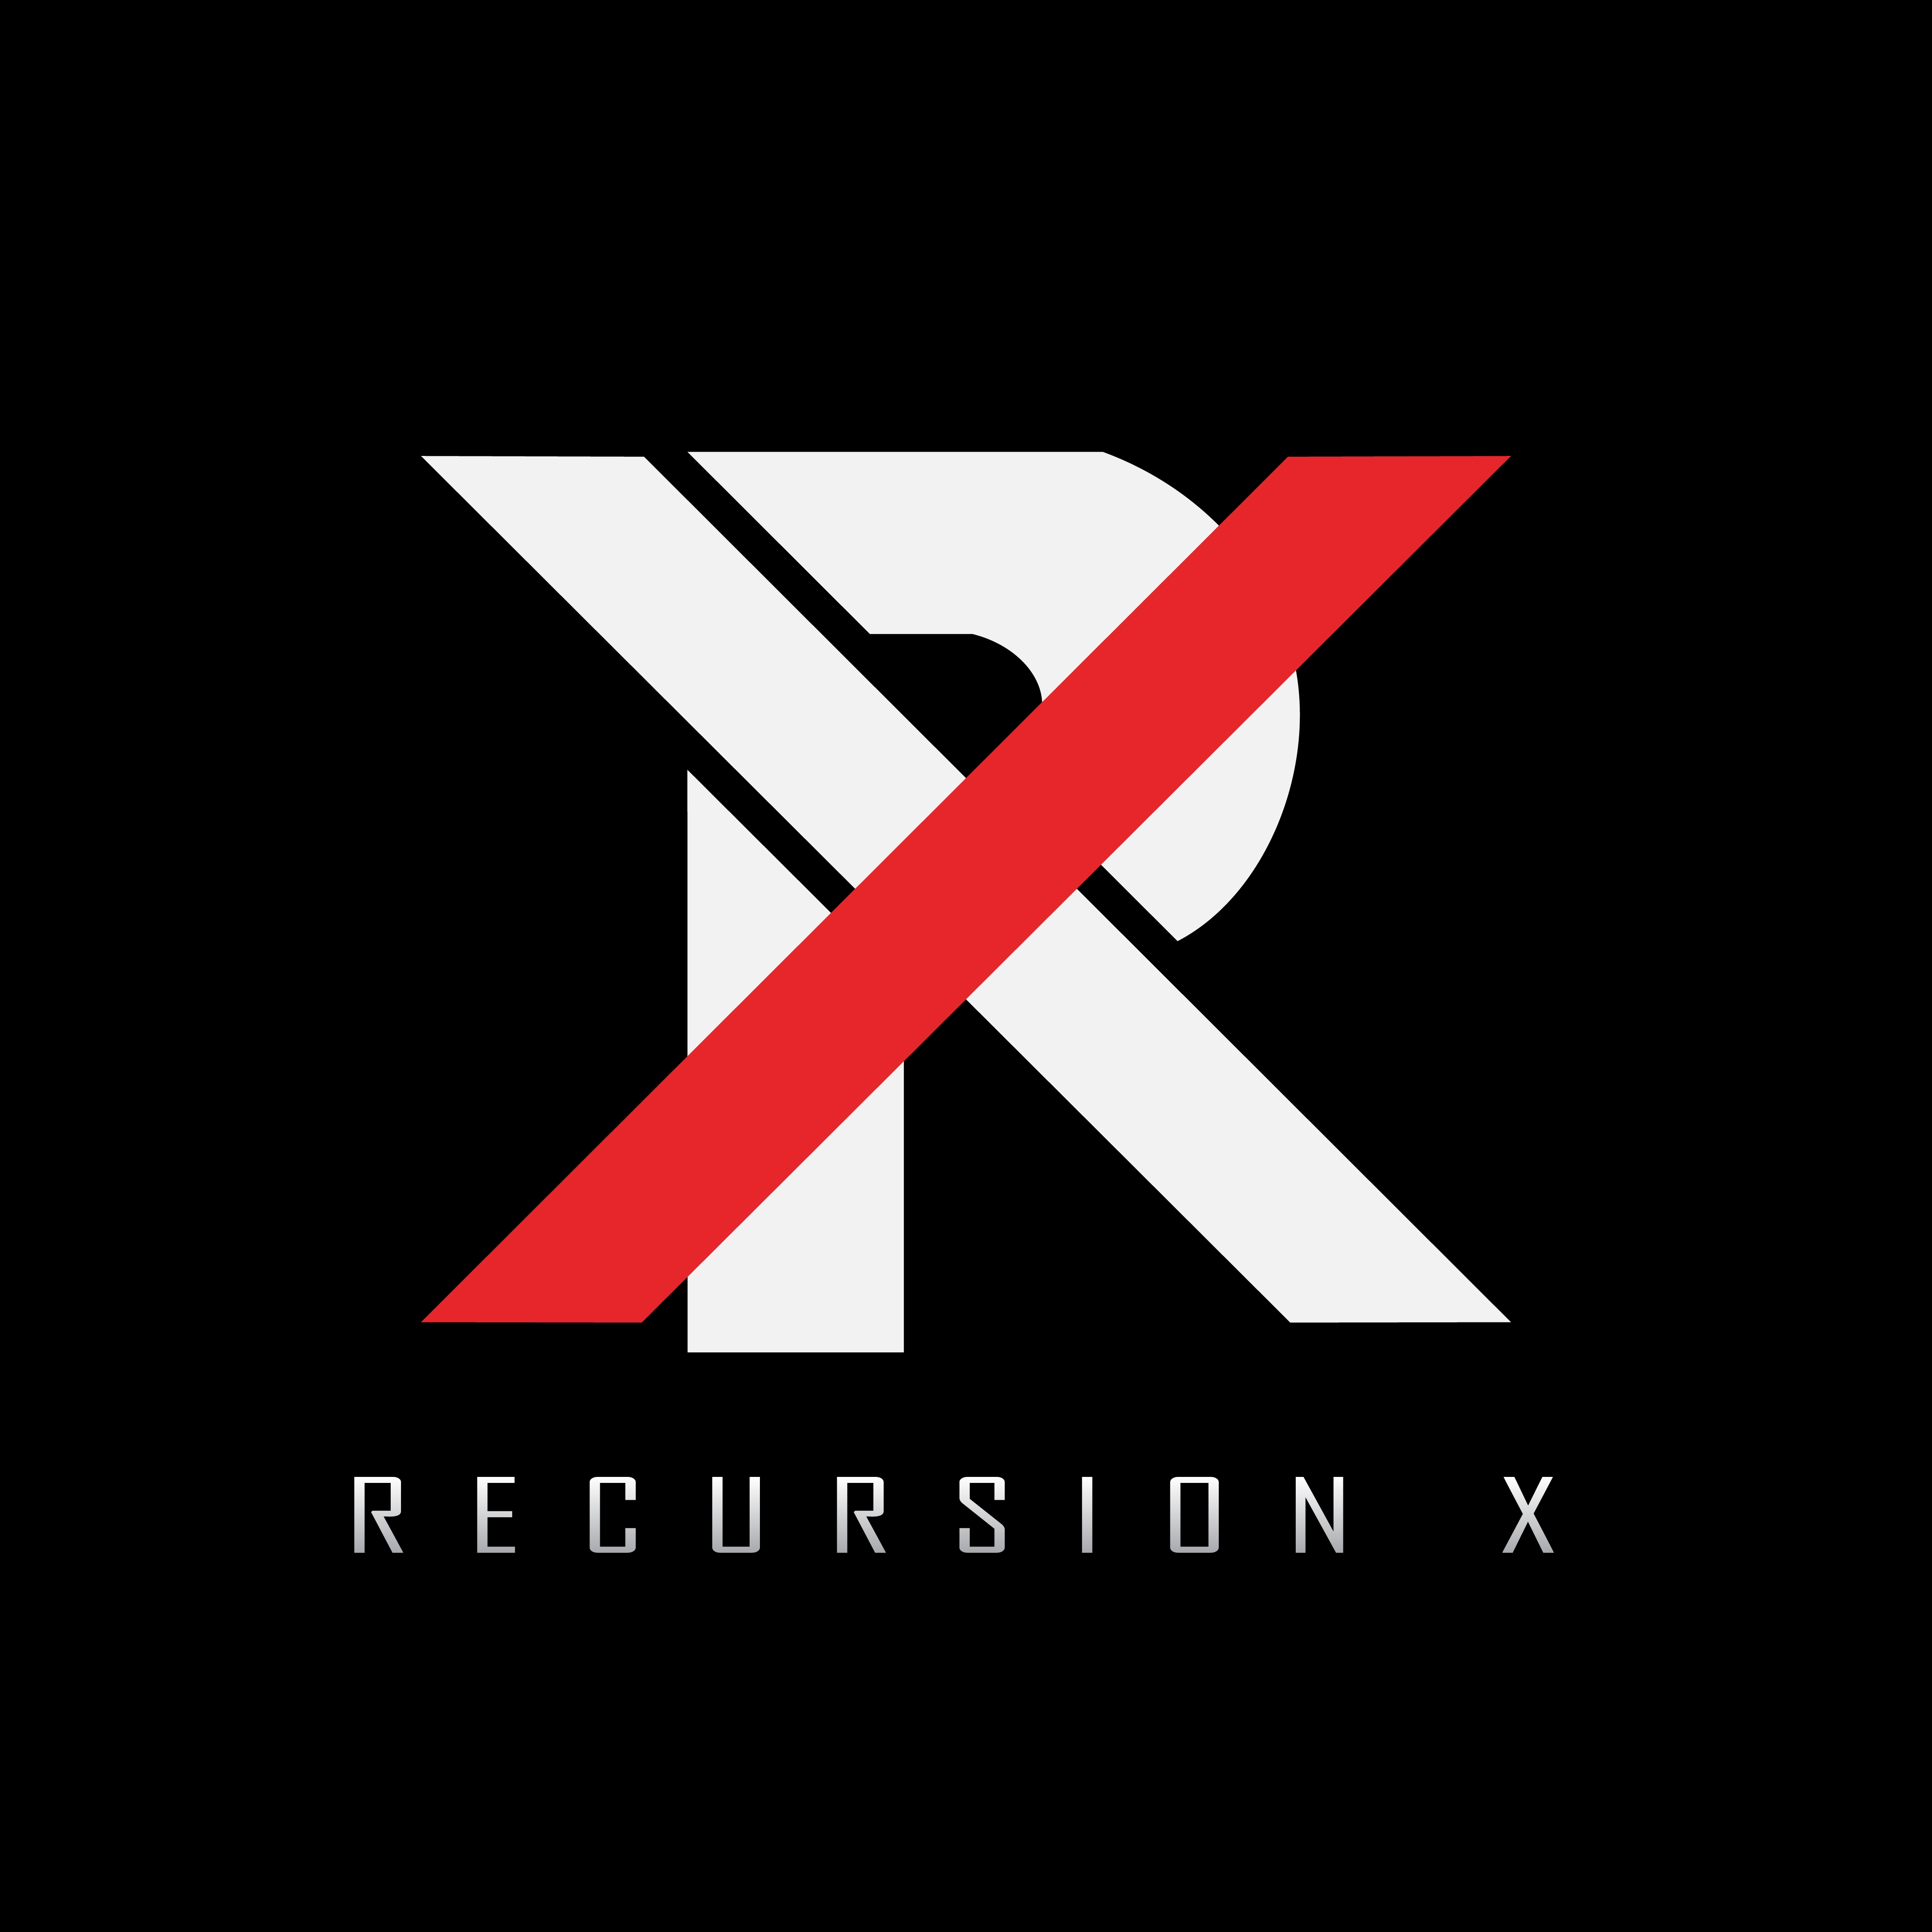 RECURSION X